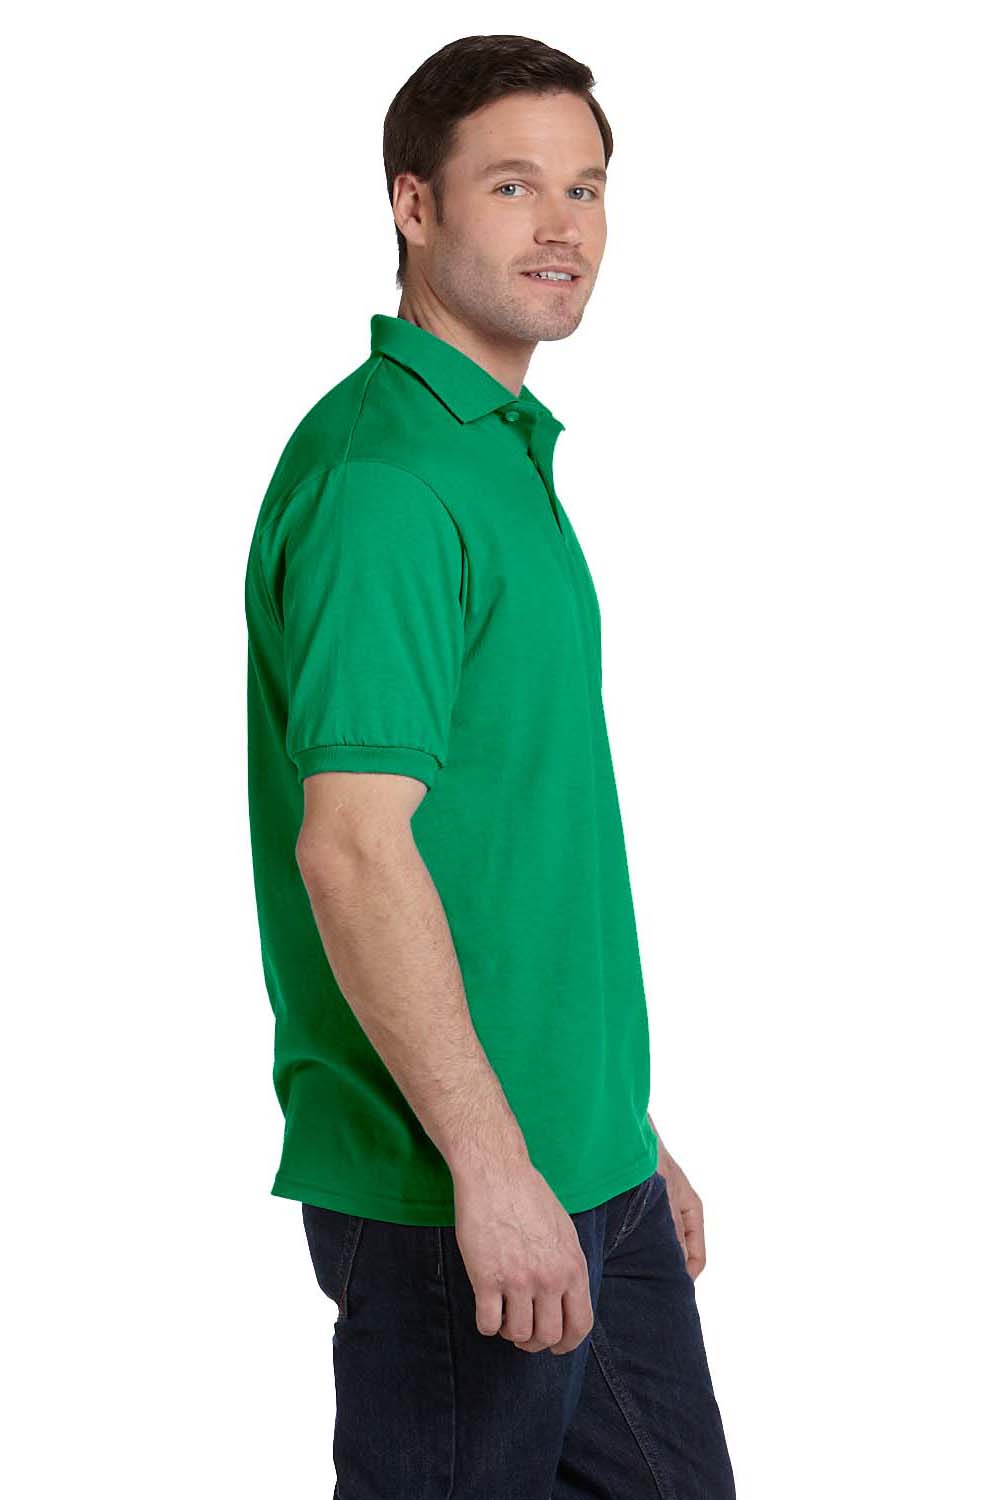 Hanes 054 Mens EcoSmart Short Sleeve Polo Shirt Kelly Green Side